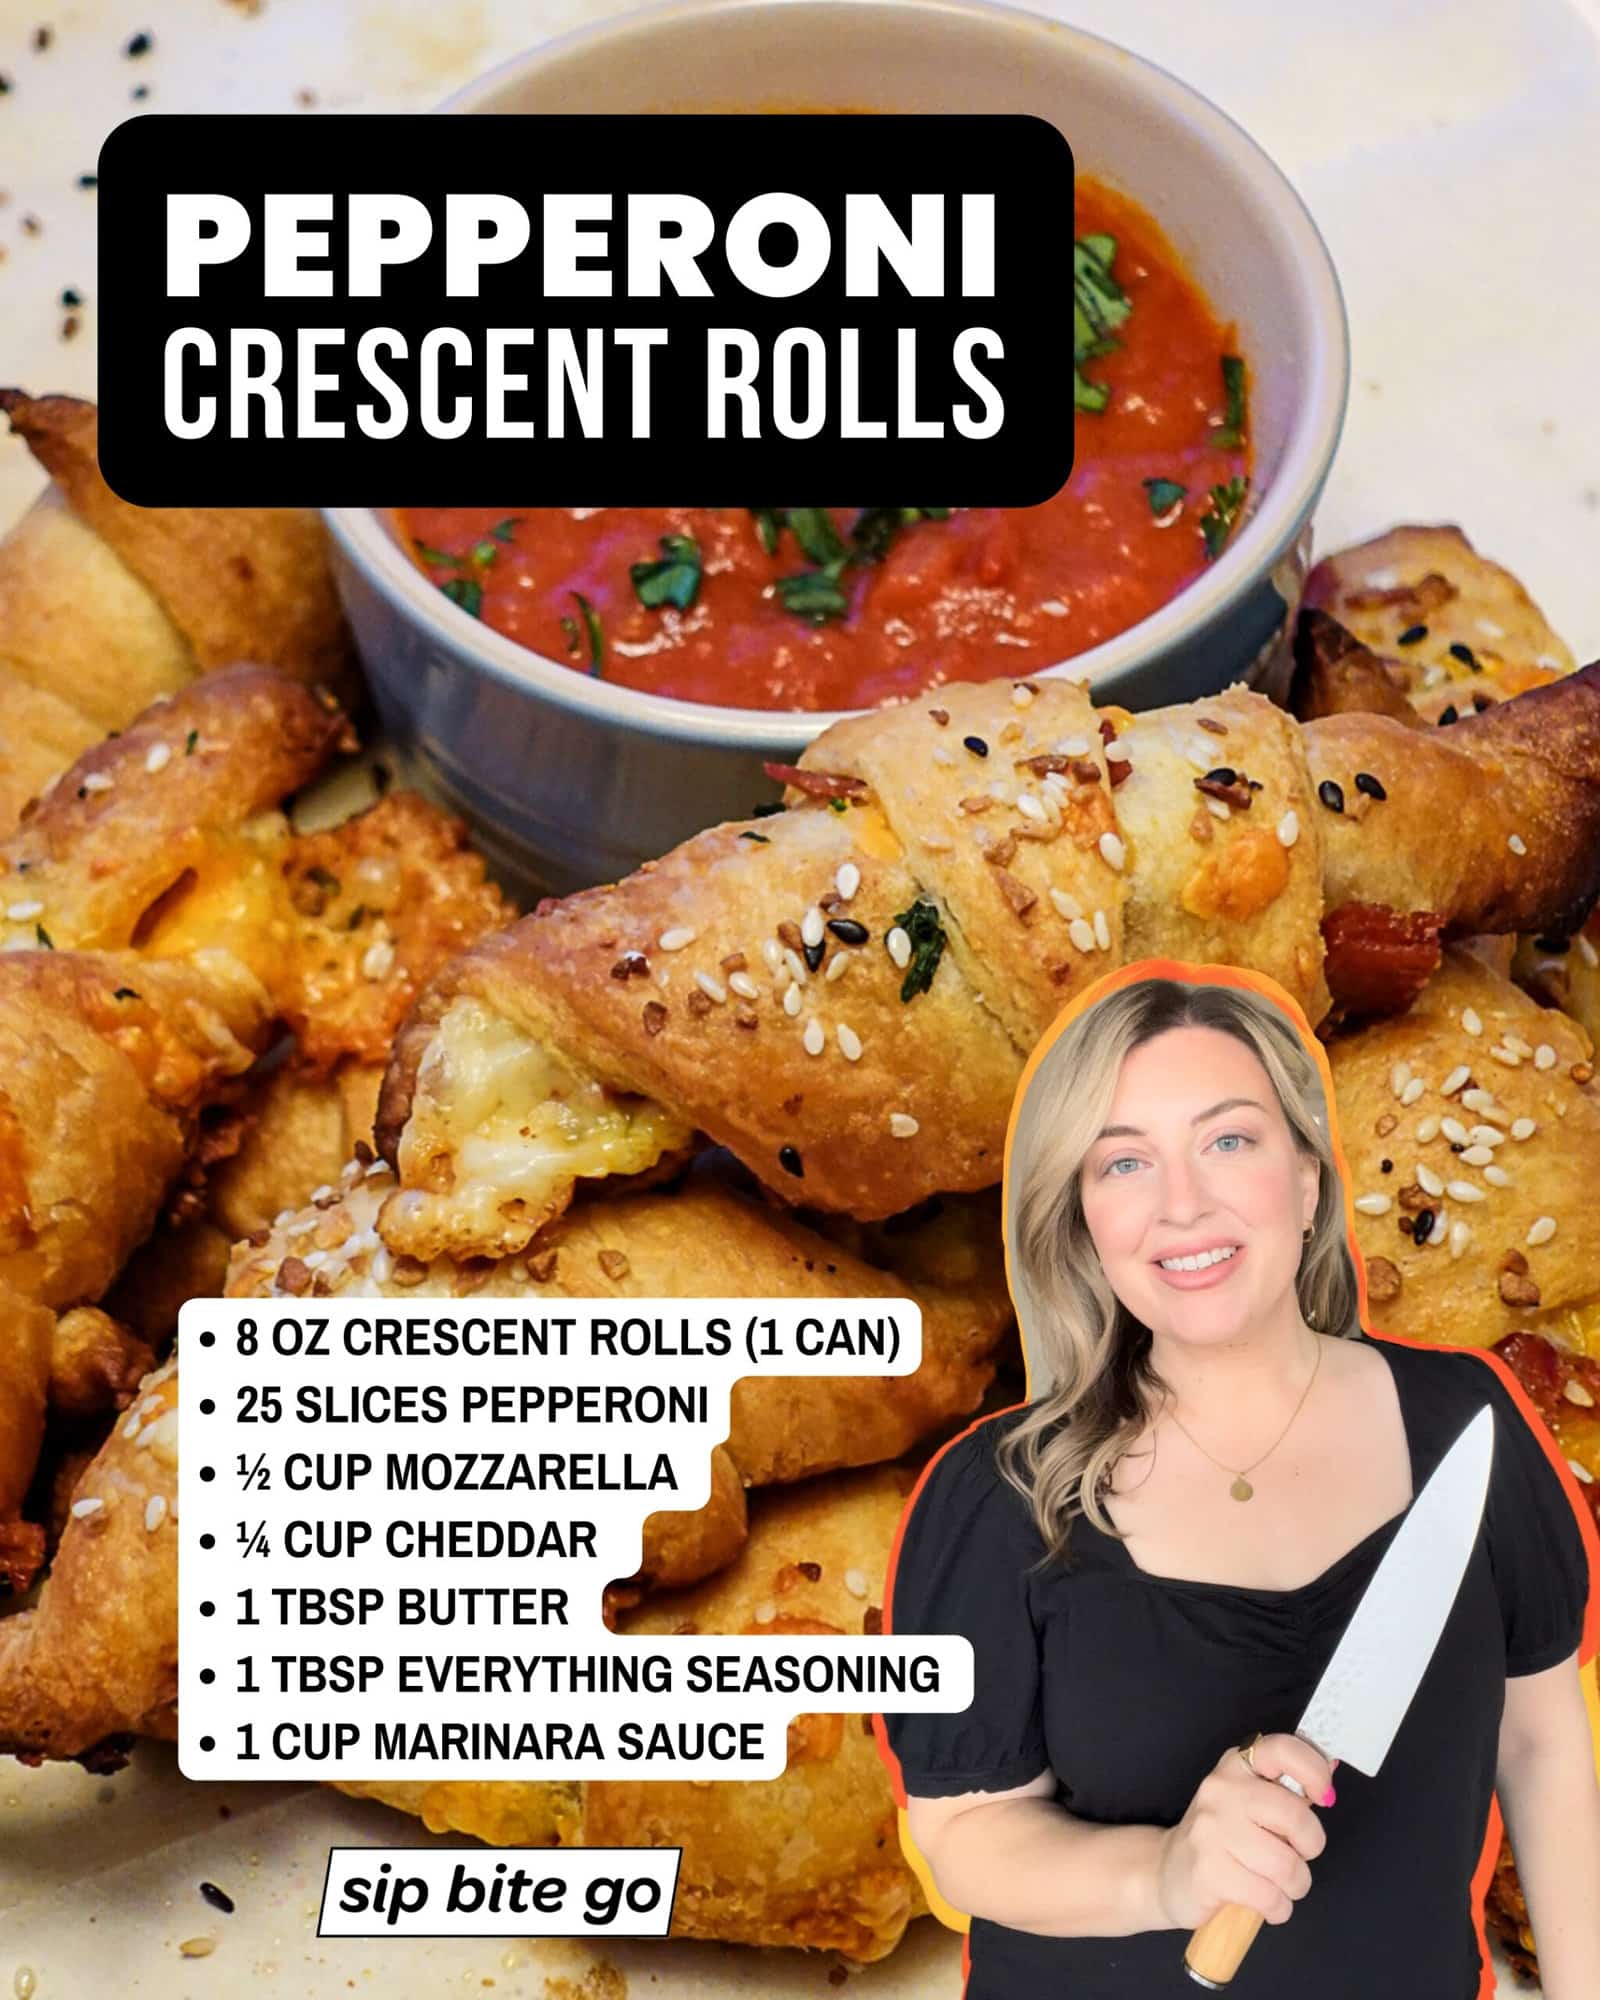 Pepperoni Crescent Rolls Ingredients List